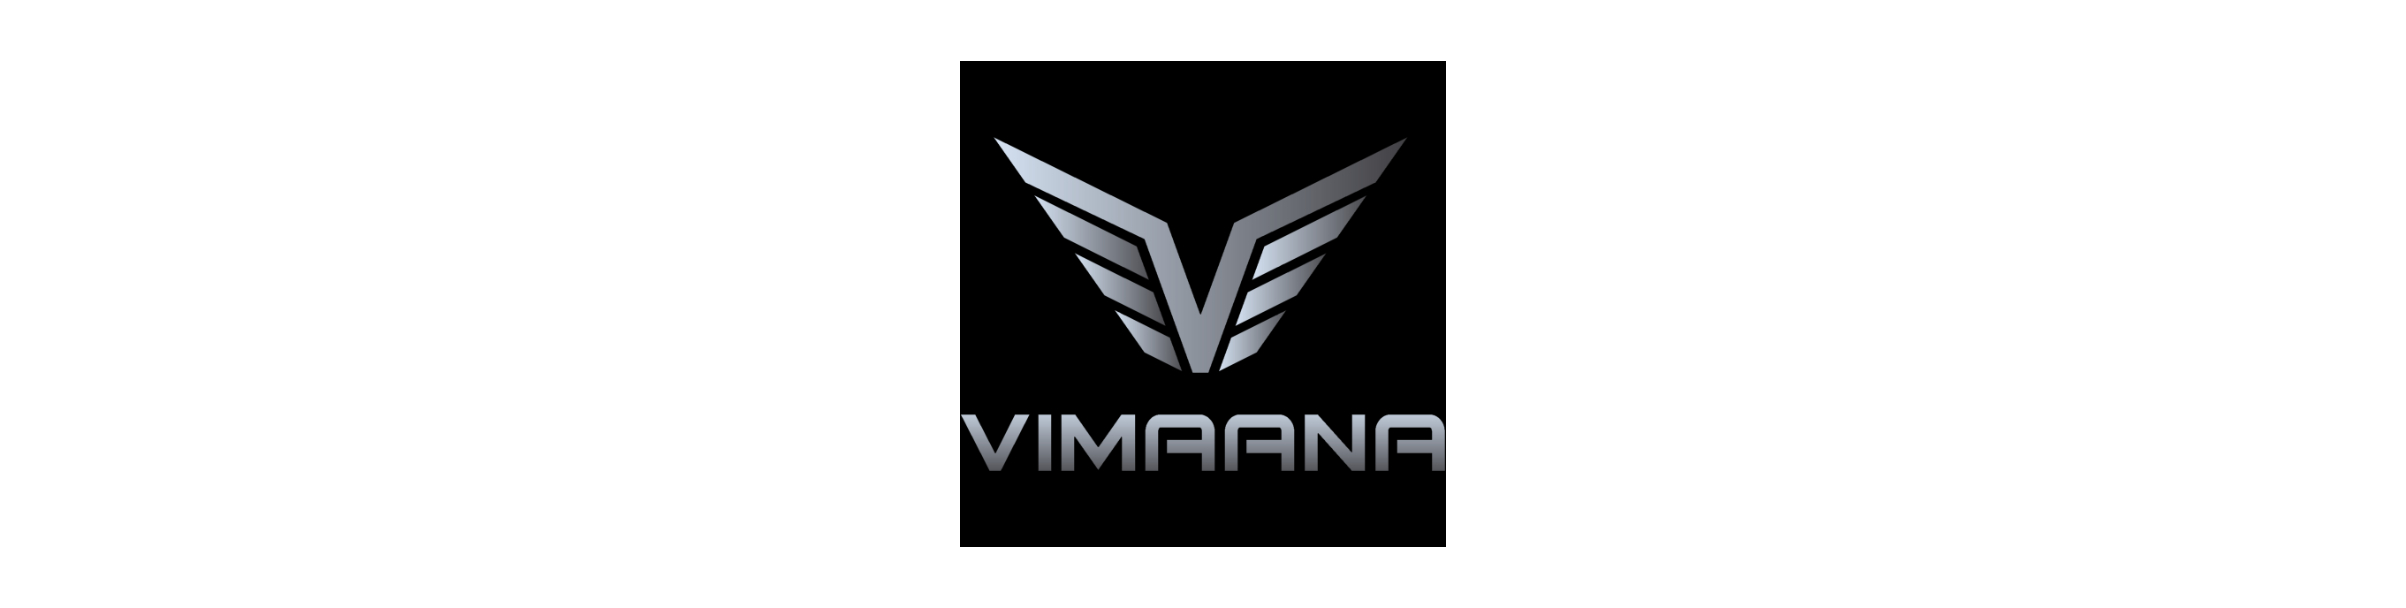 Vimaana logo